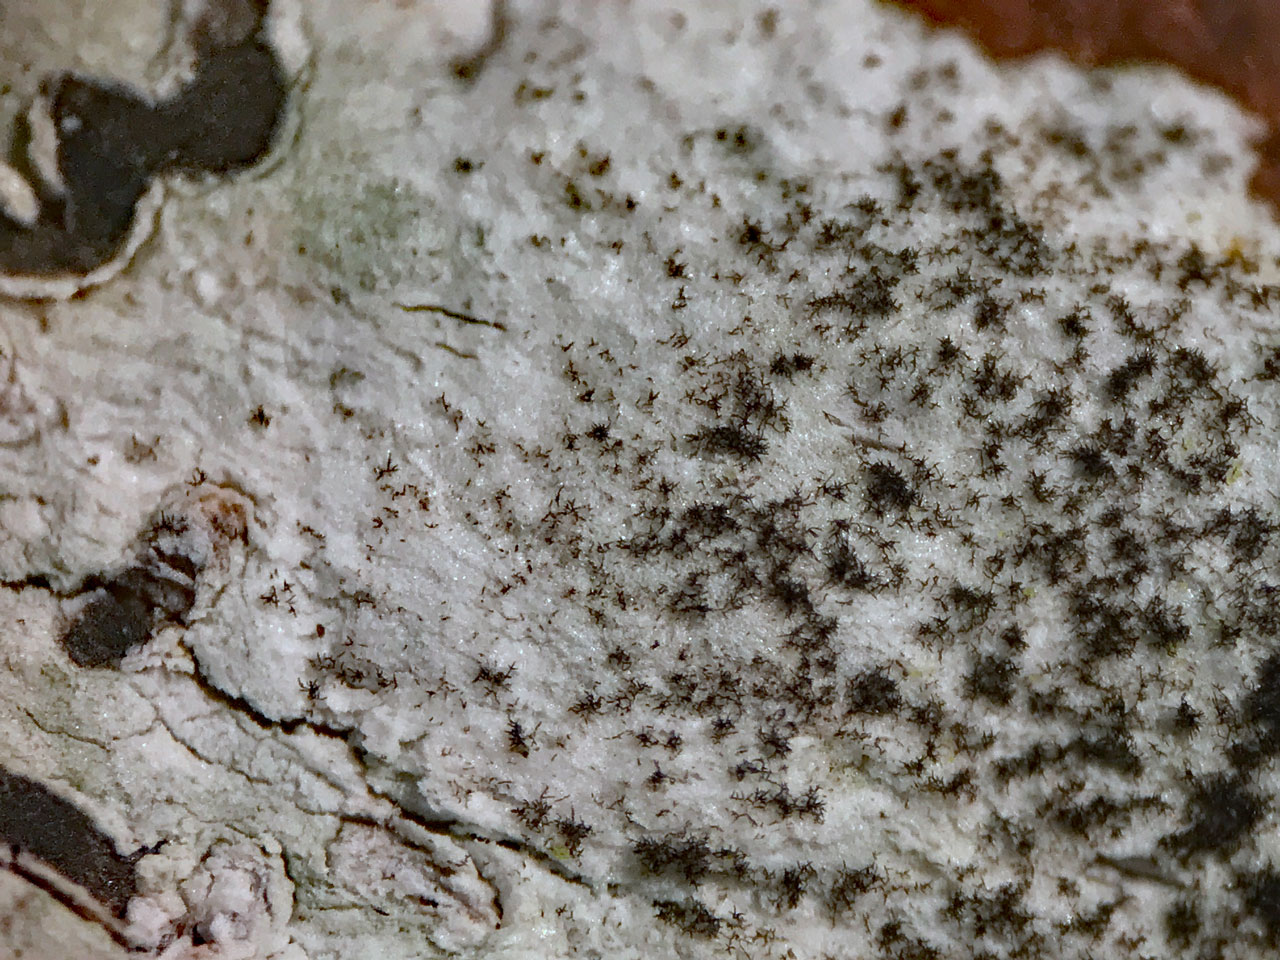 Teniolella cf hawksworthiana on Phaeographis denticulata, Beech, Hinchesley Wood, New Forest